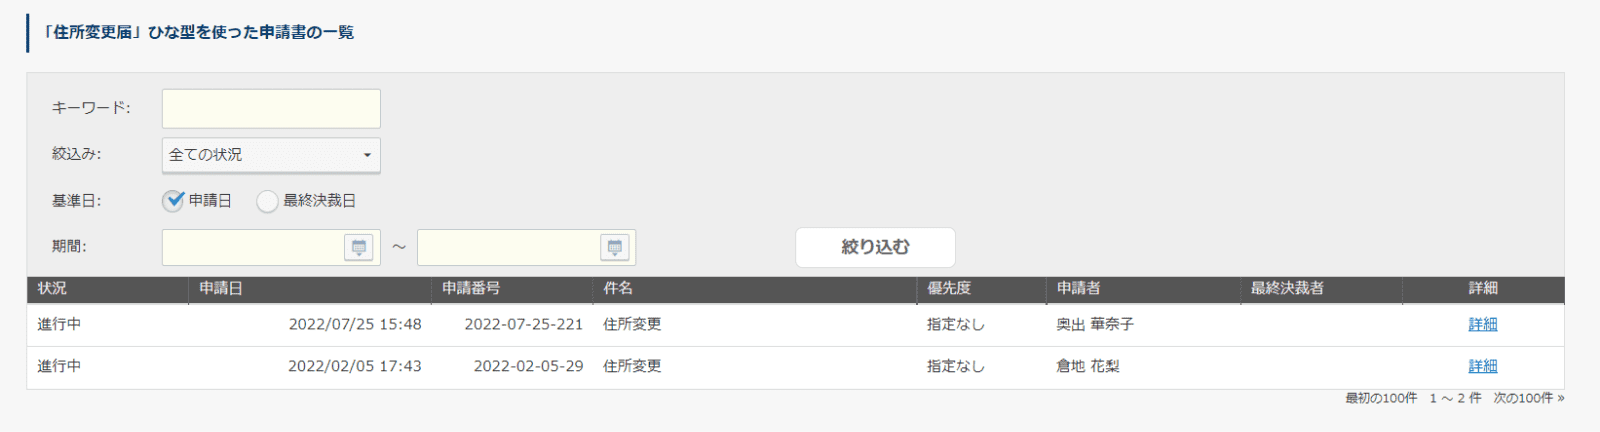 rakumo ワークフロー 管理者向けの検索画面で基準日指定